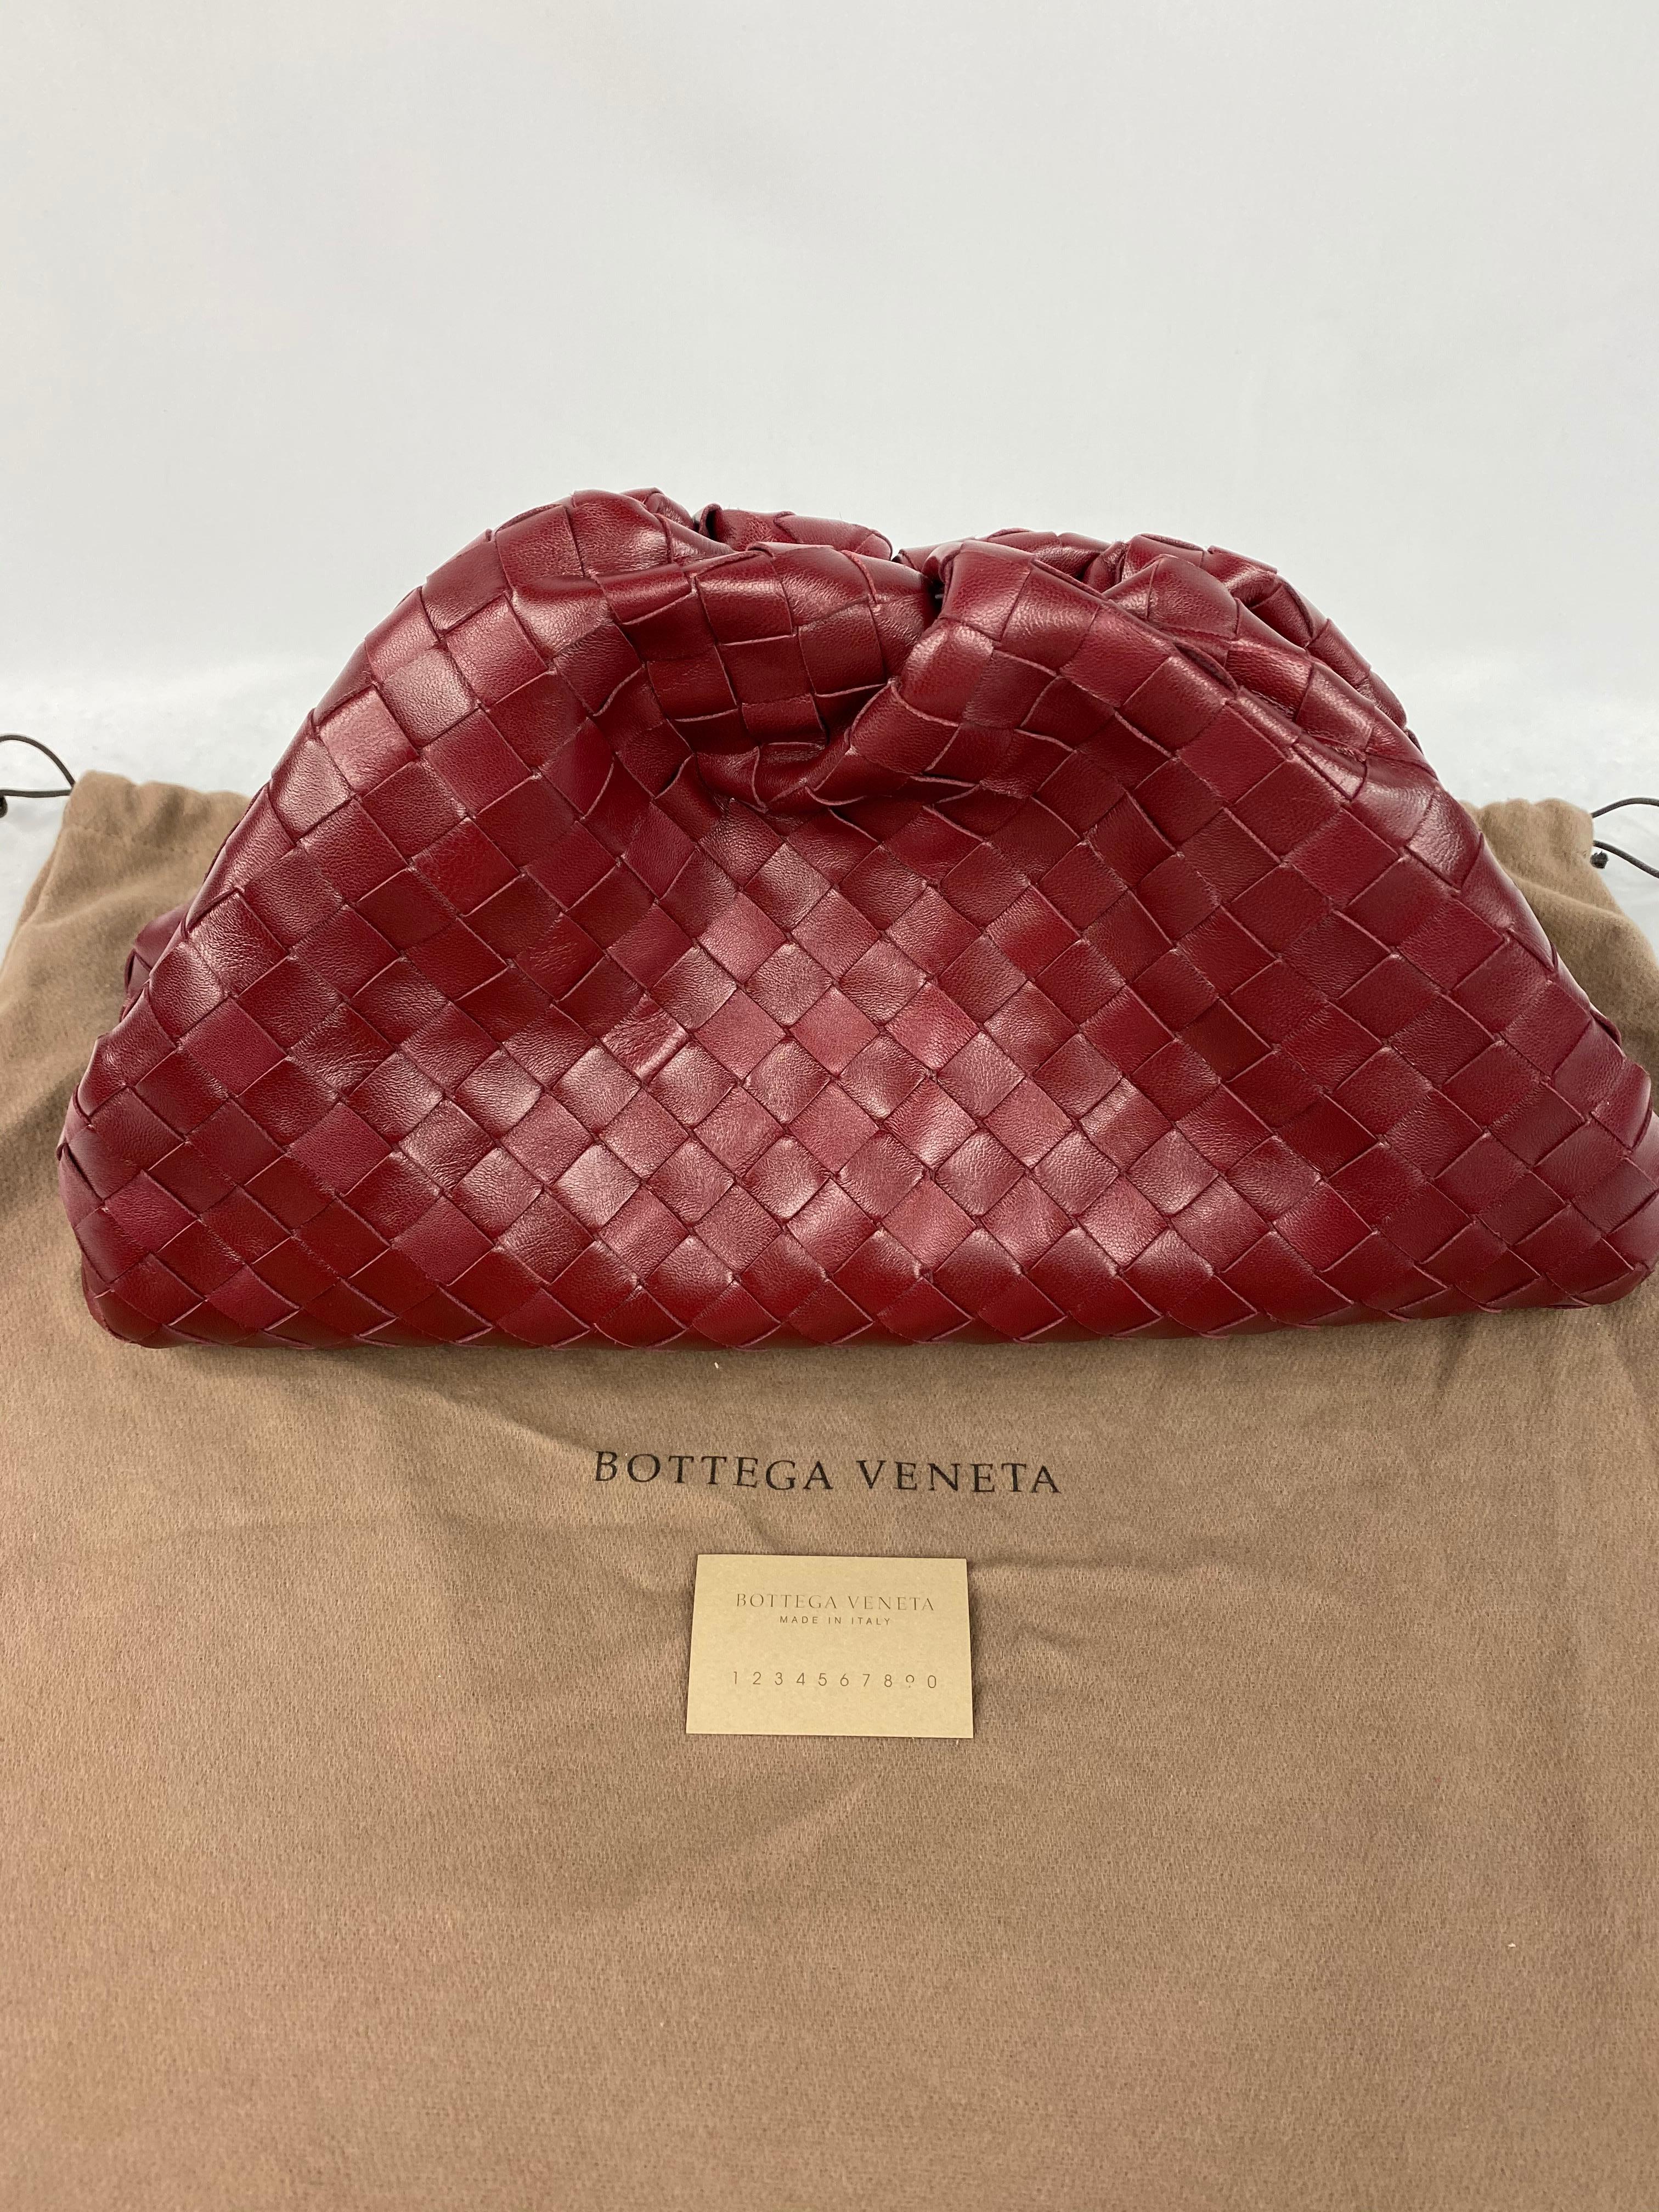 Bottega Veneta The Pouch Red Leather Clutch Purse Handbag  3